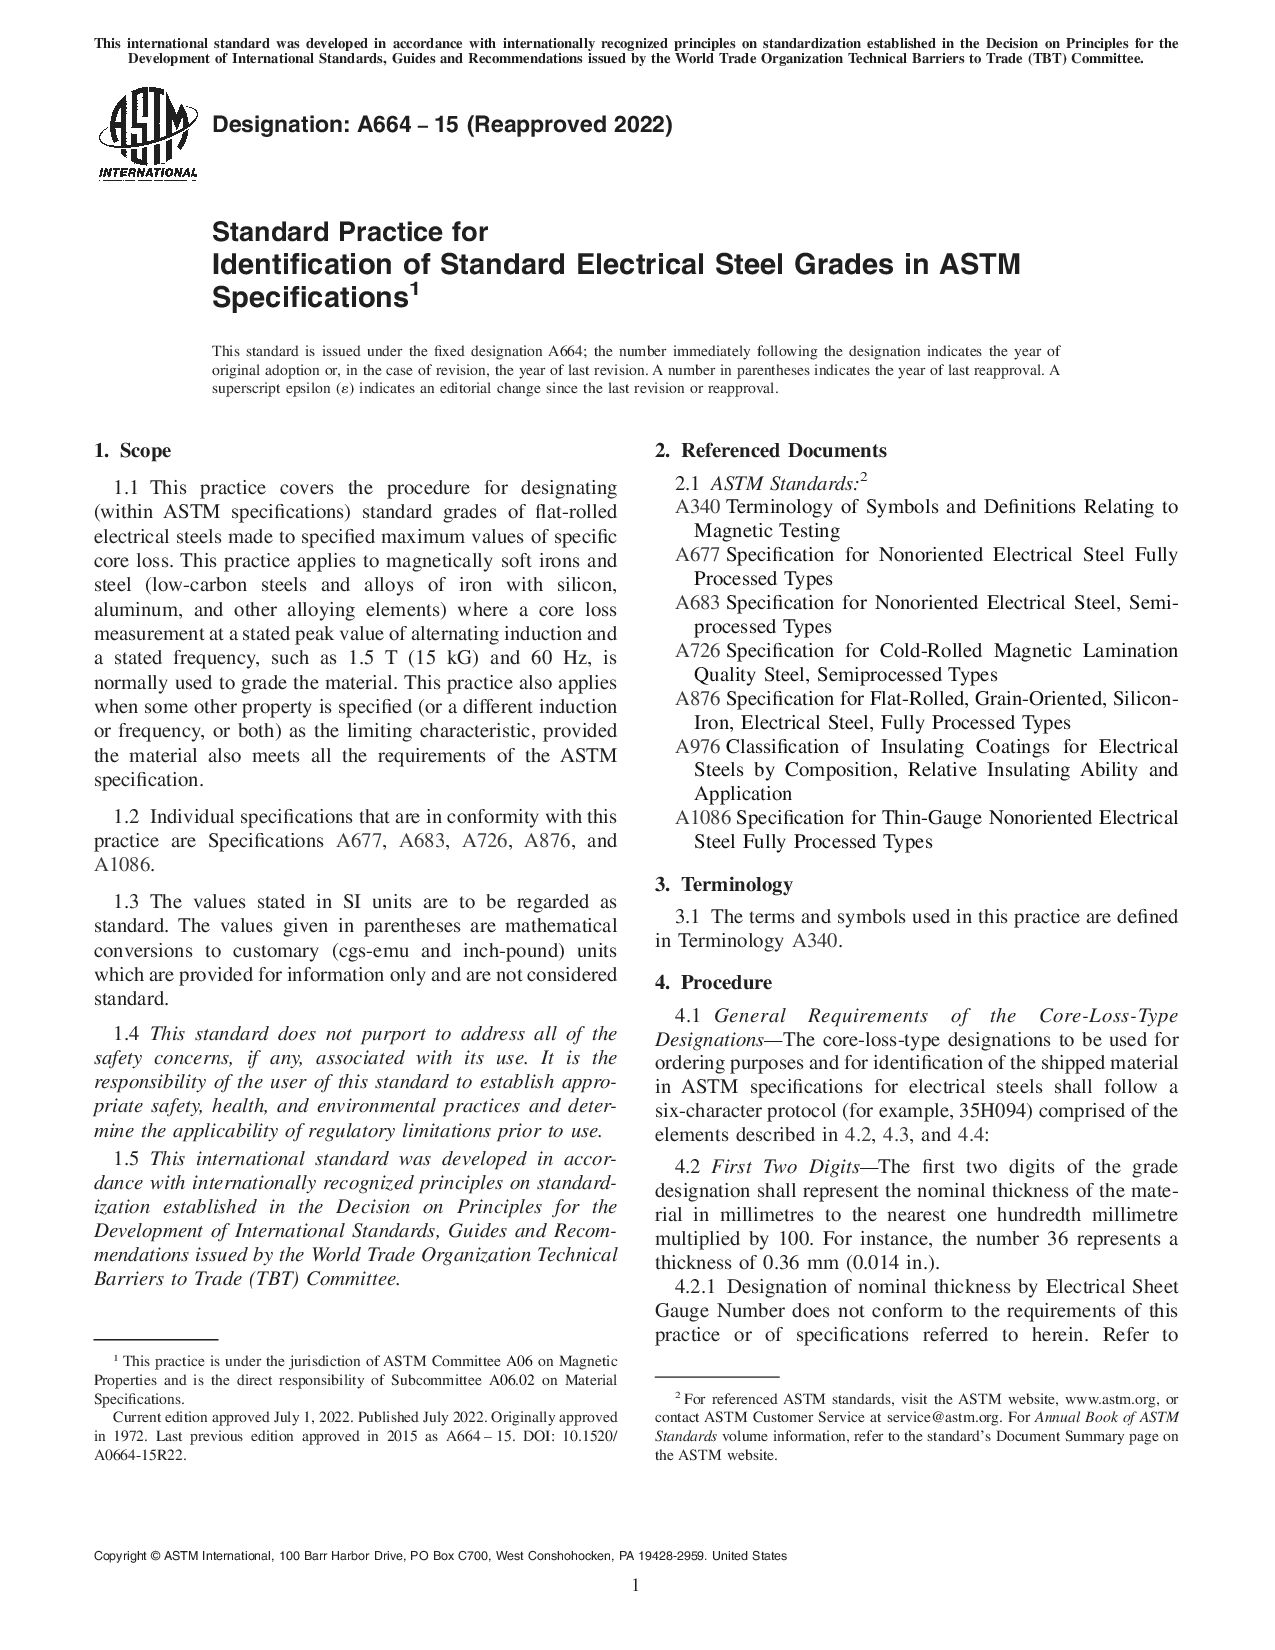 ASTM A664-15(2022)